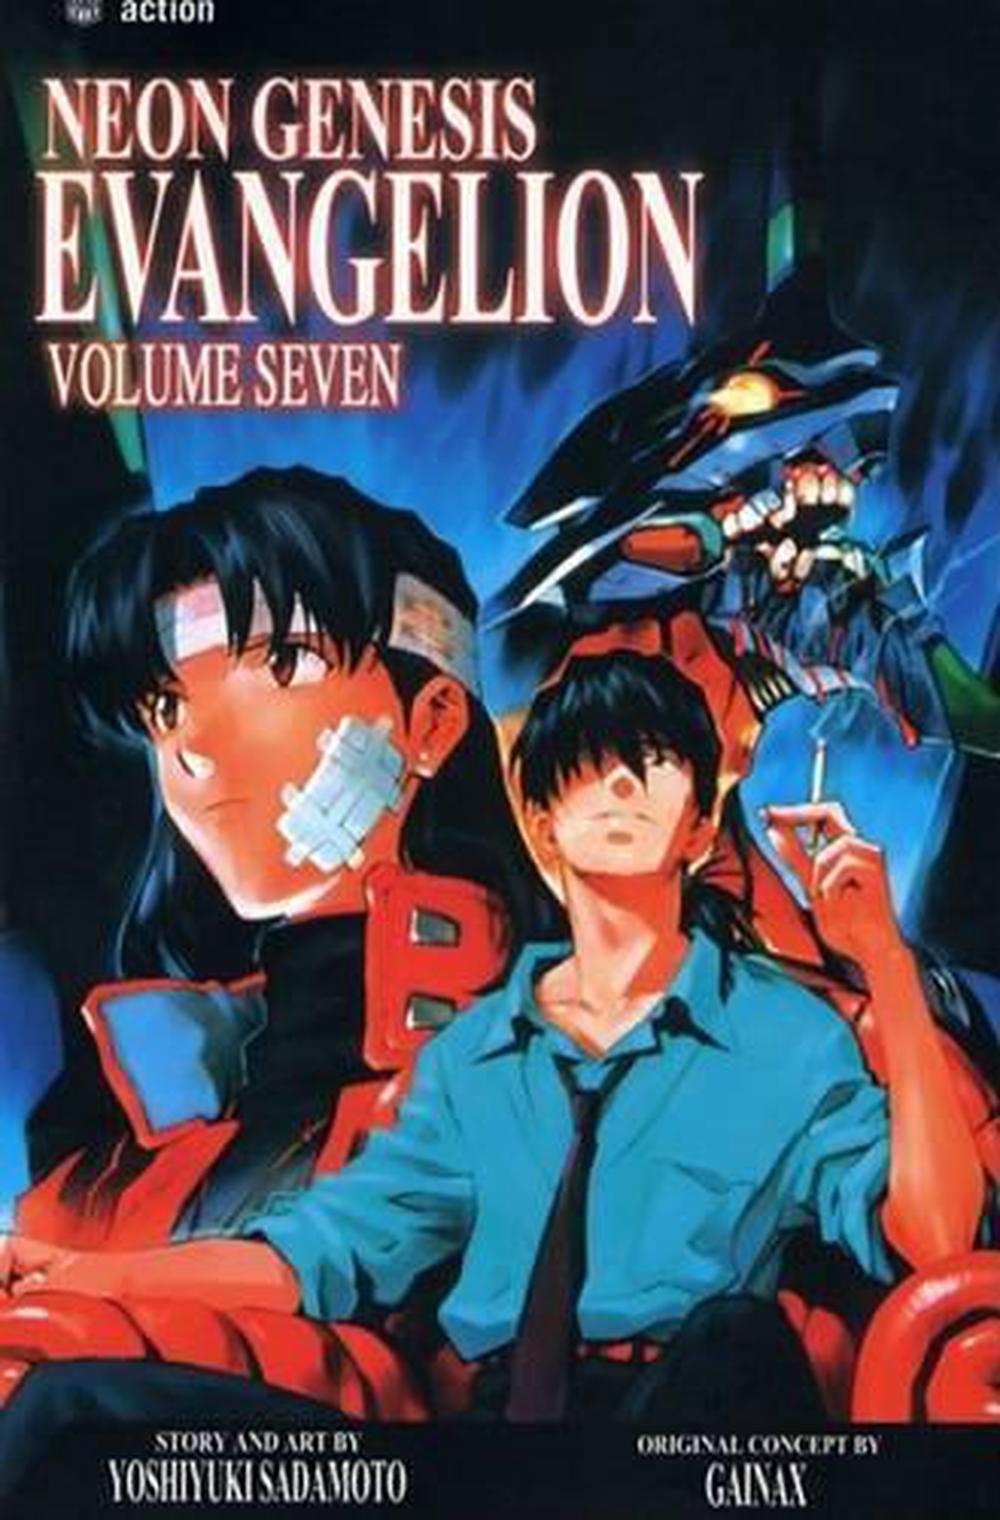 Neon Genesis Evangelion Volume 7 By Yoshiyuki Sadamoto English 8773